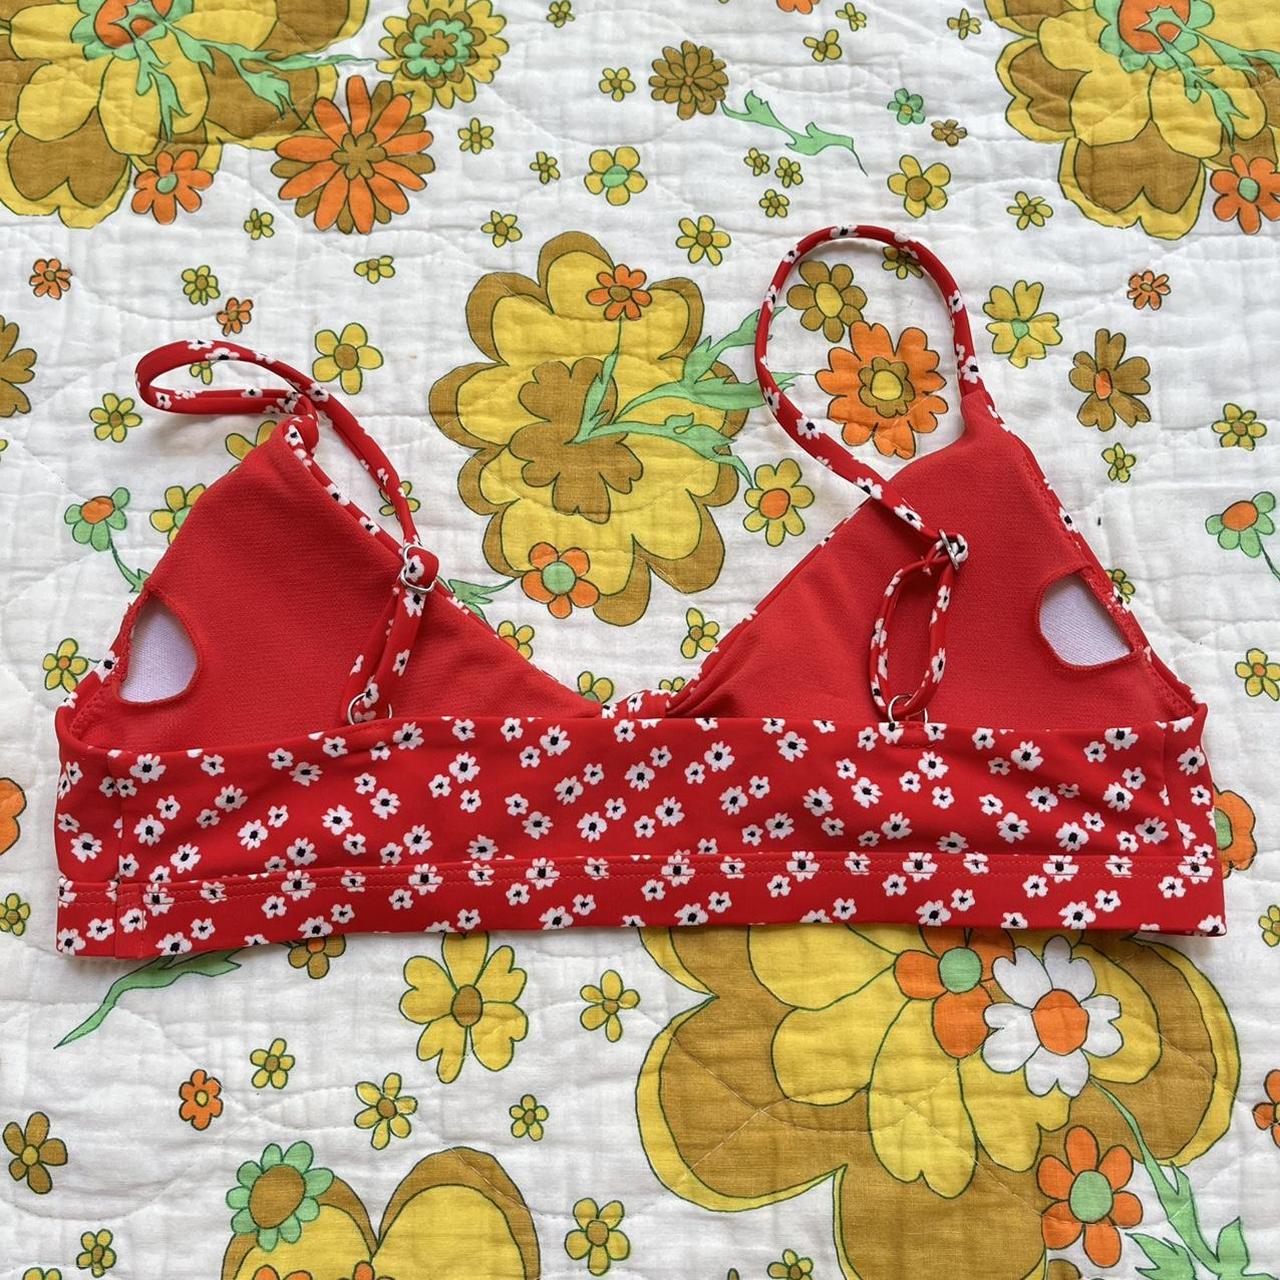 Product Image 2 - Red and white daisy bikini